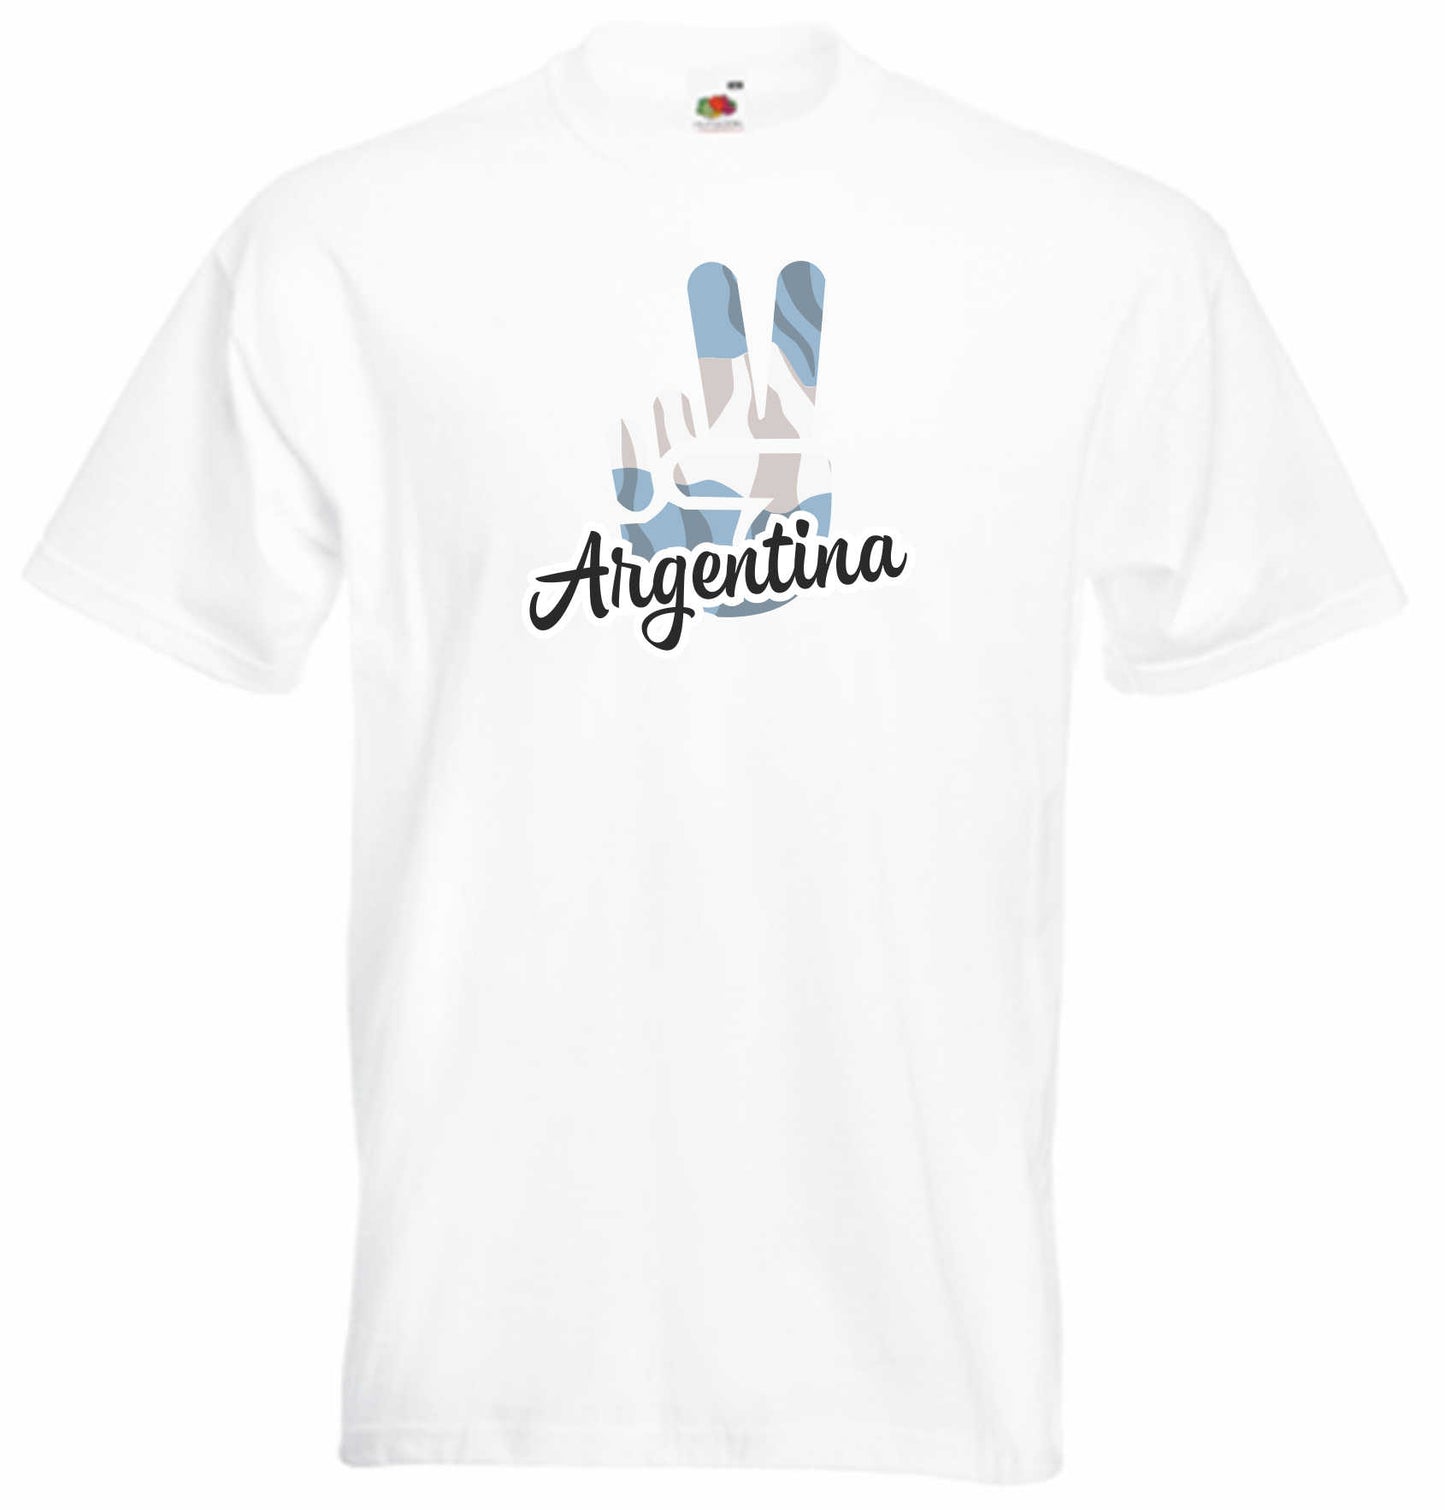 T-Shirt Herren - Victory - Flagge / Fahne - Argentina - Sieg